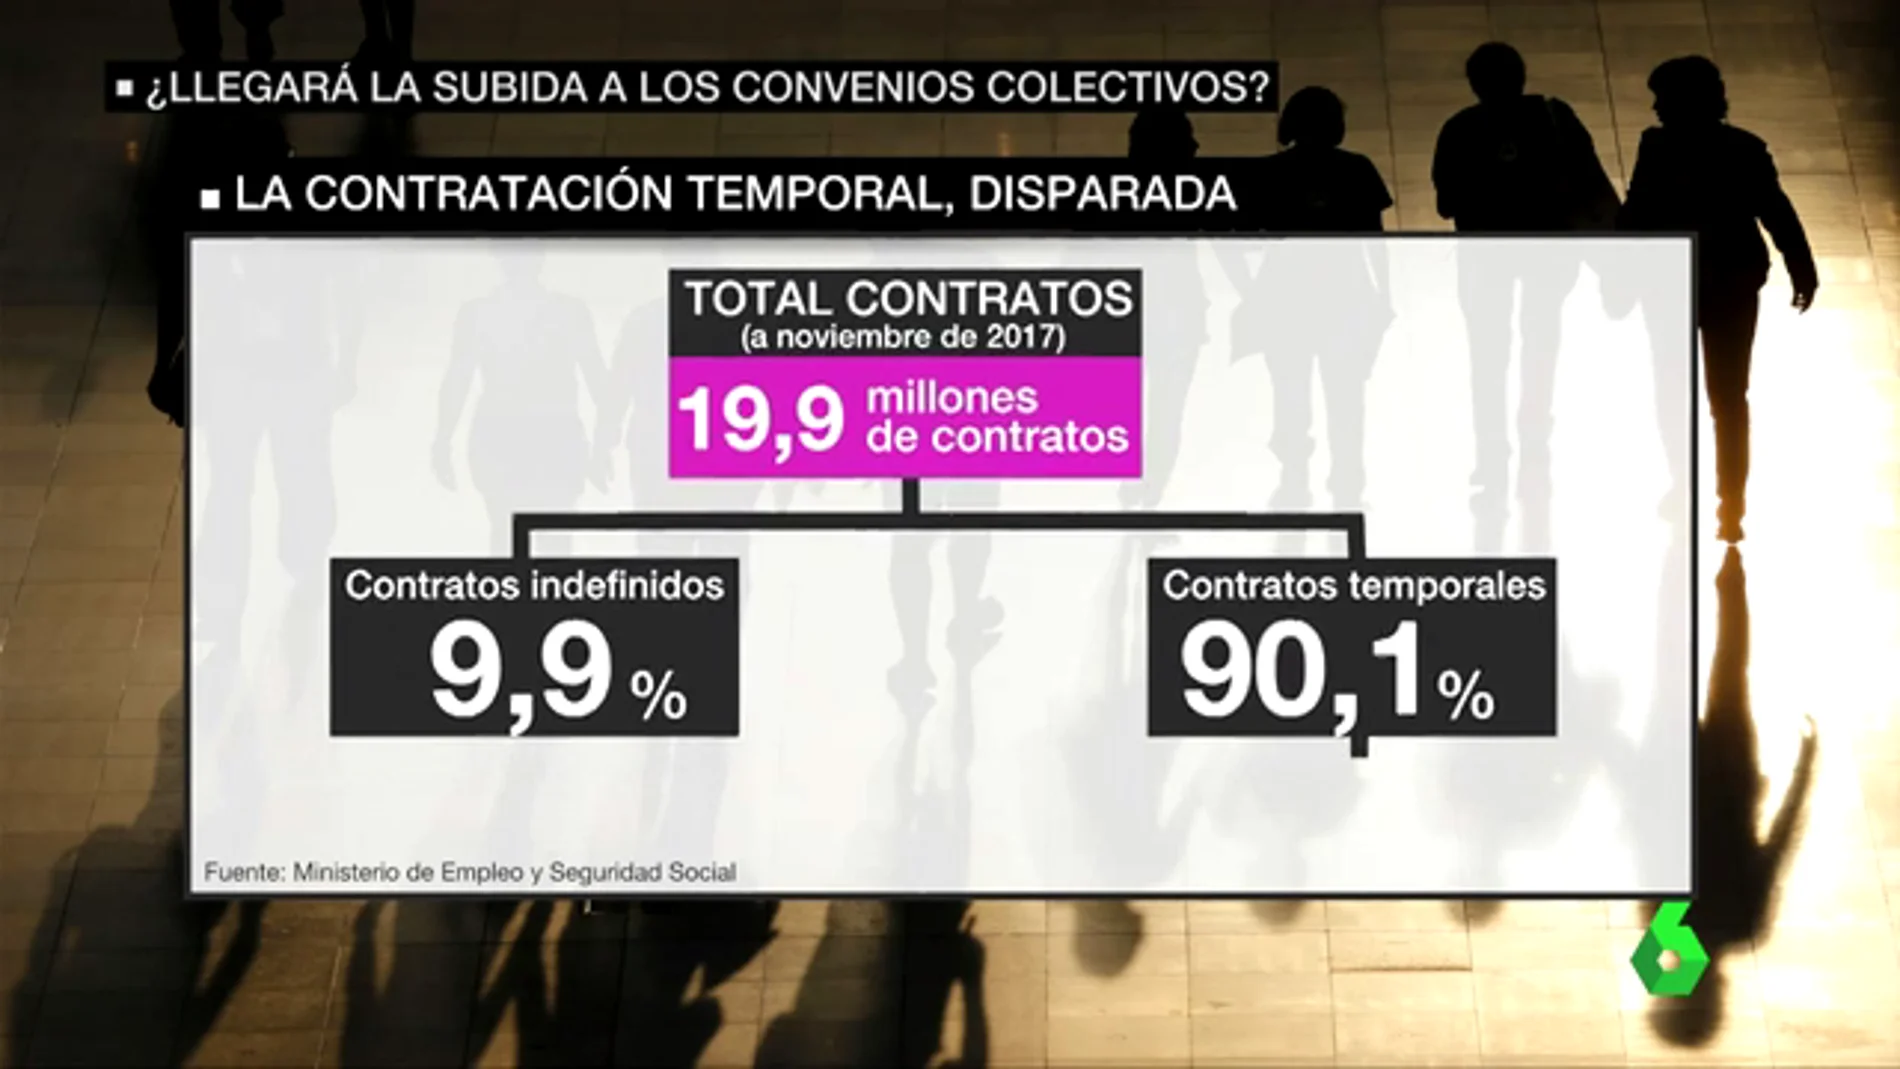 Contratos temporales en España